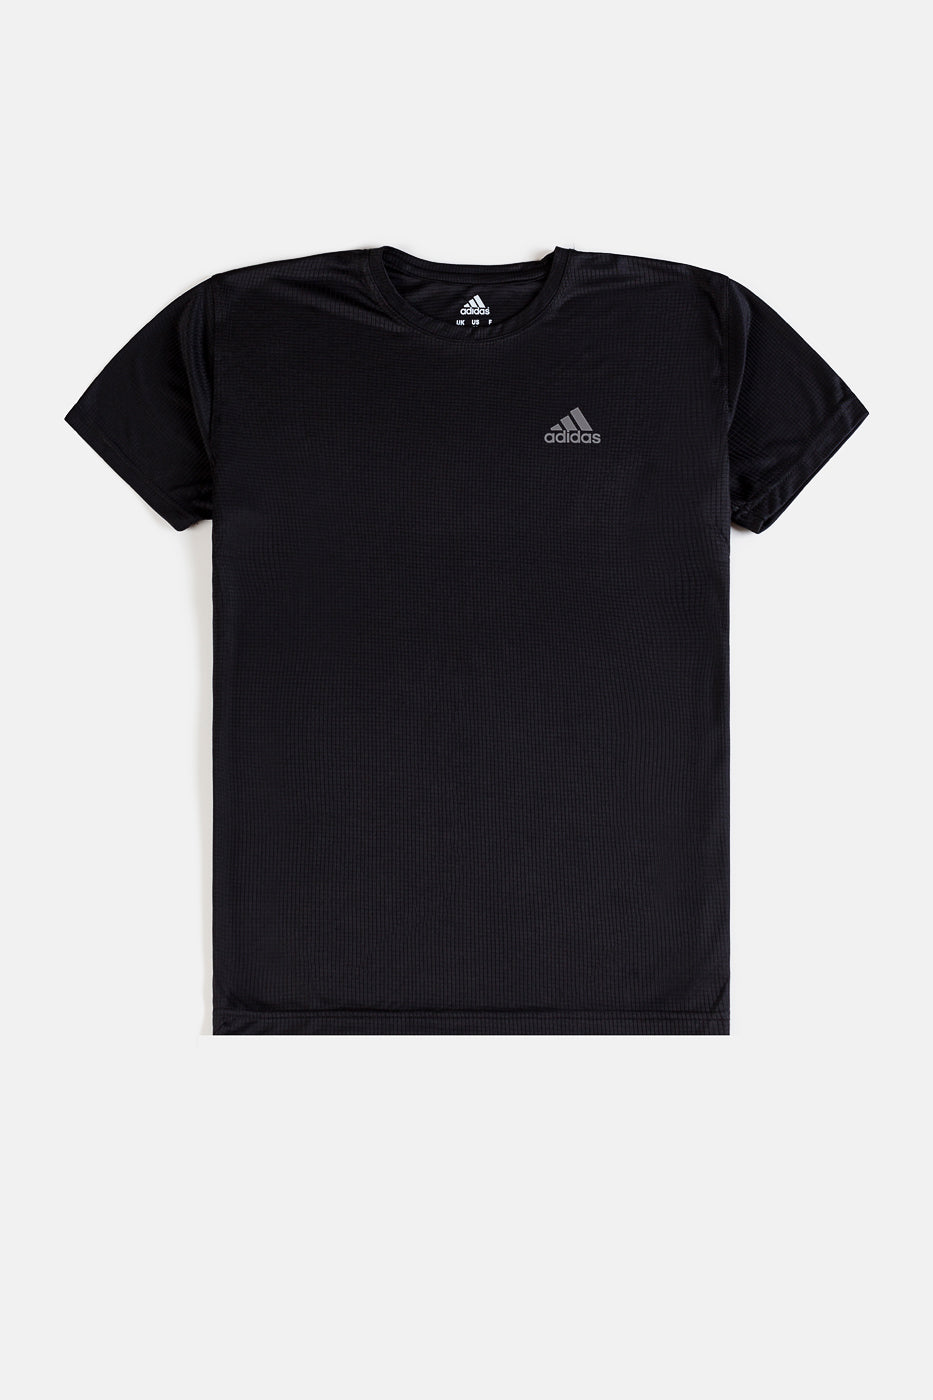 Adidas Imported Premium Sports T Shirt – Black